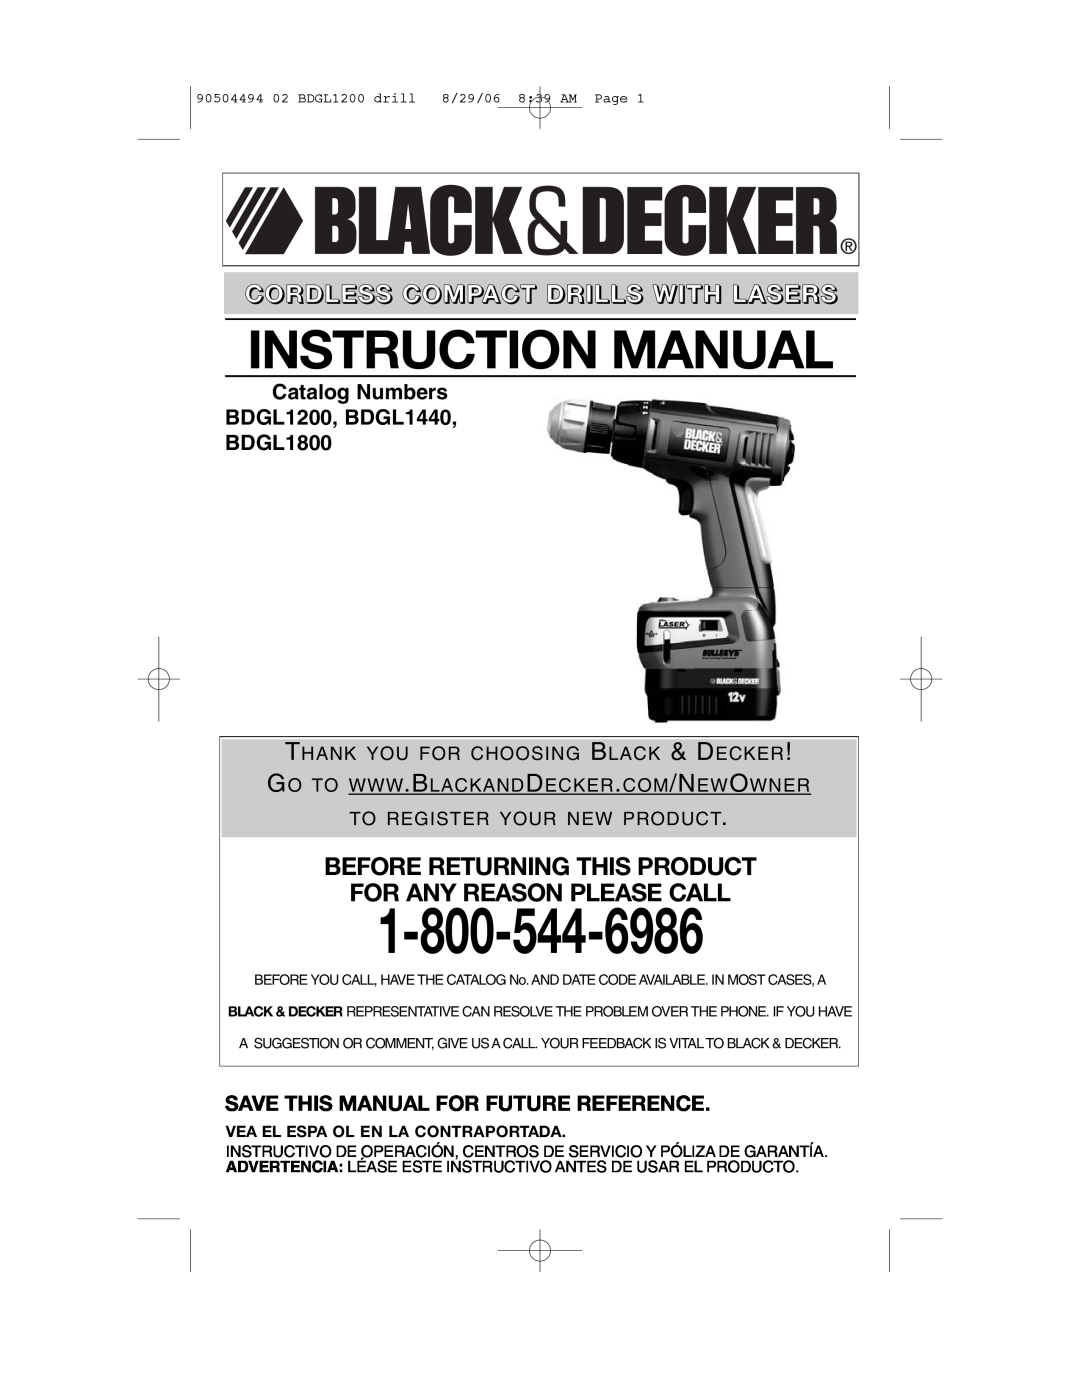 Black & Decker BDGL1440, BDGL1800, BDGL1200 instruction manual Instruction Manual, Cordless Compact Drills With Lasers 